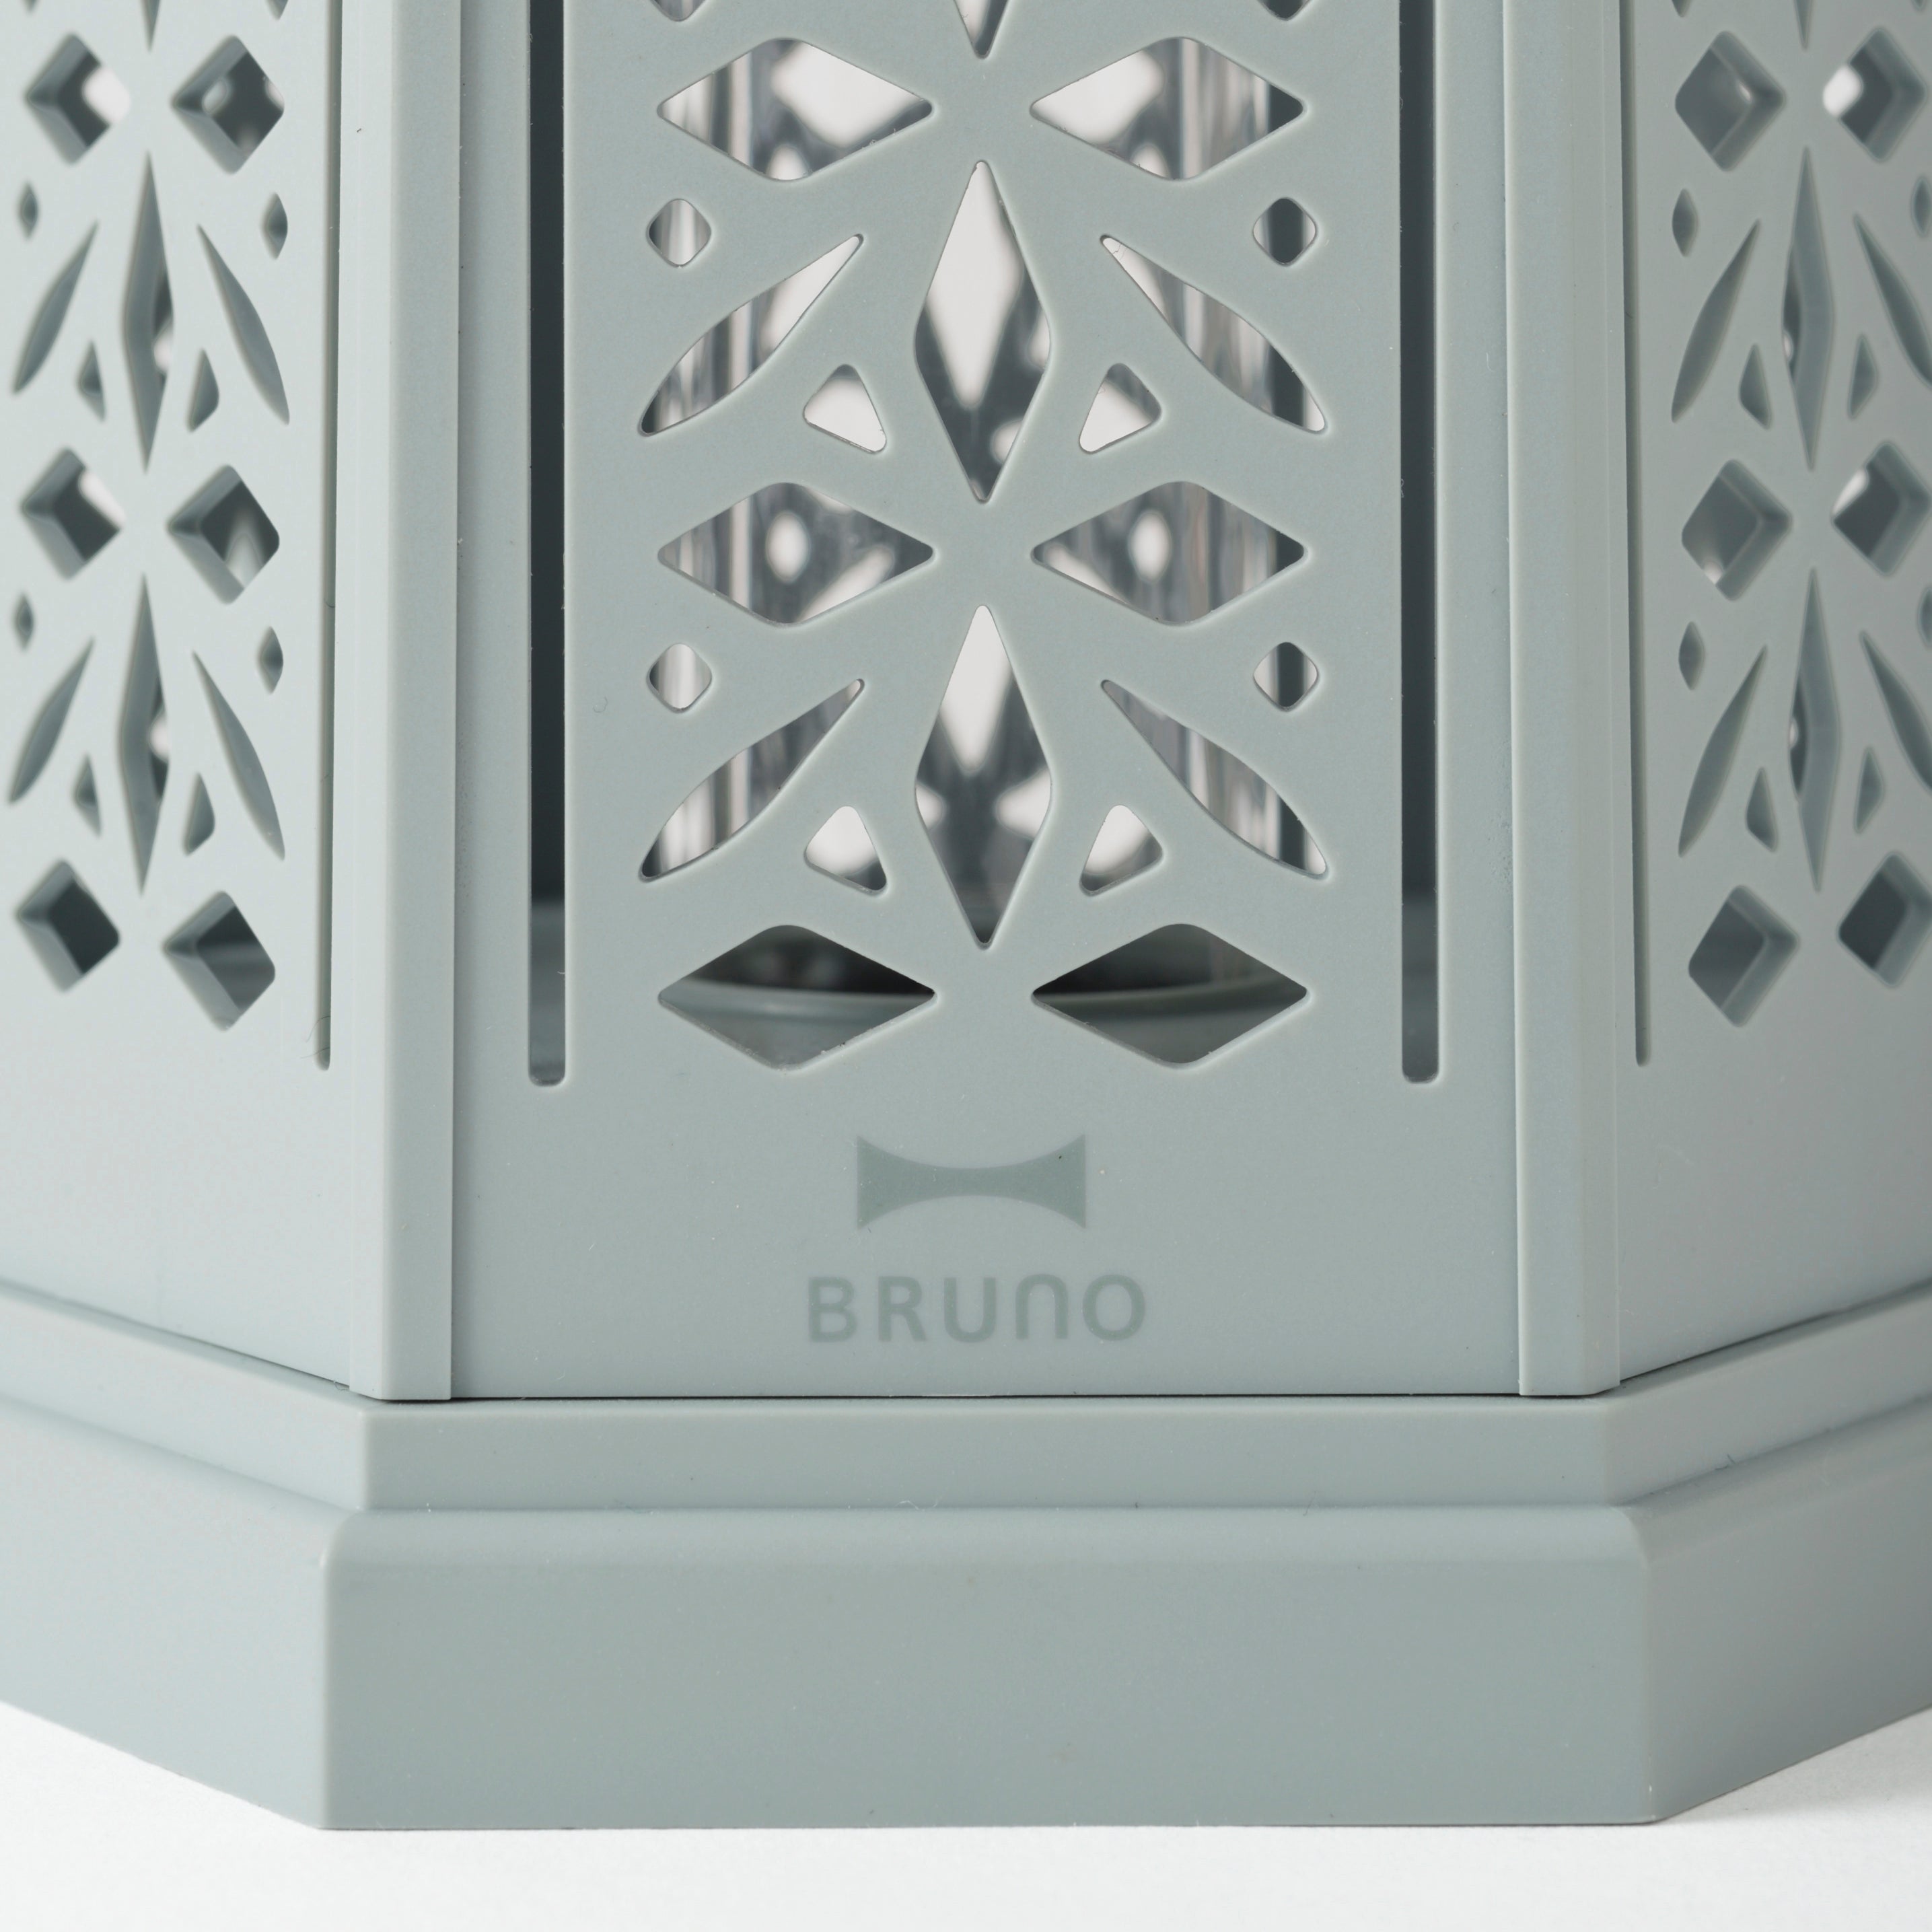 BRUNO LED Silhouette Lantern - Charcoal Gray BOL006-CHGY